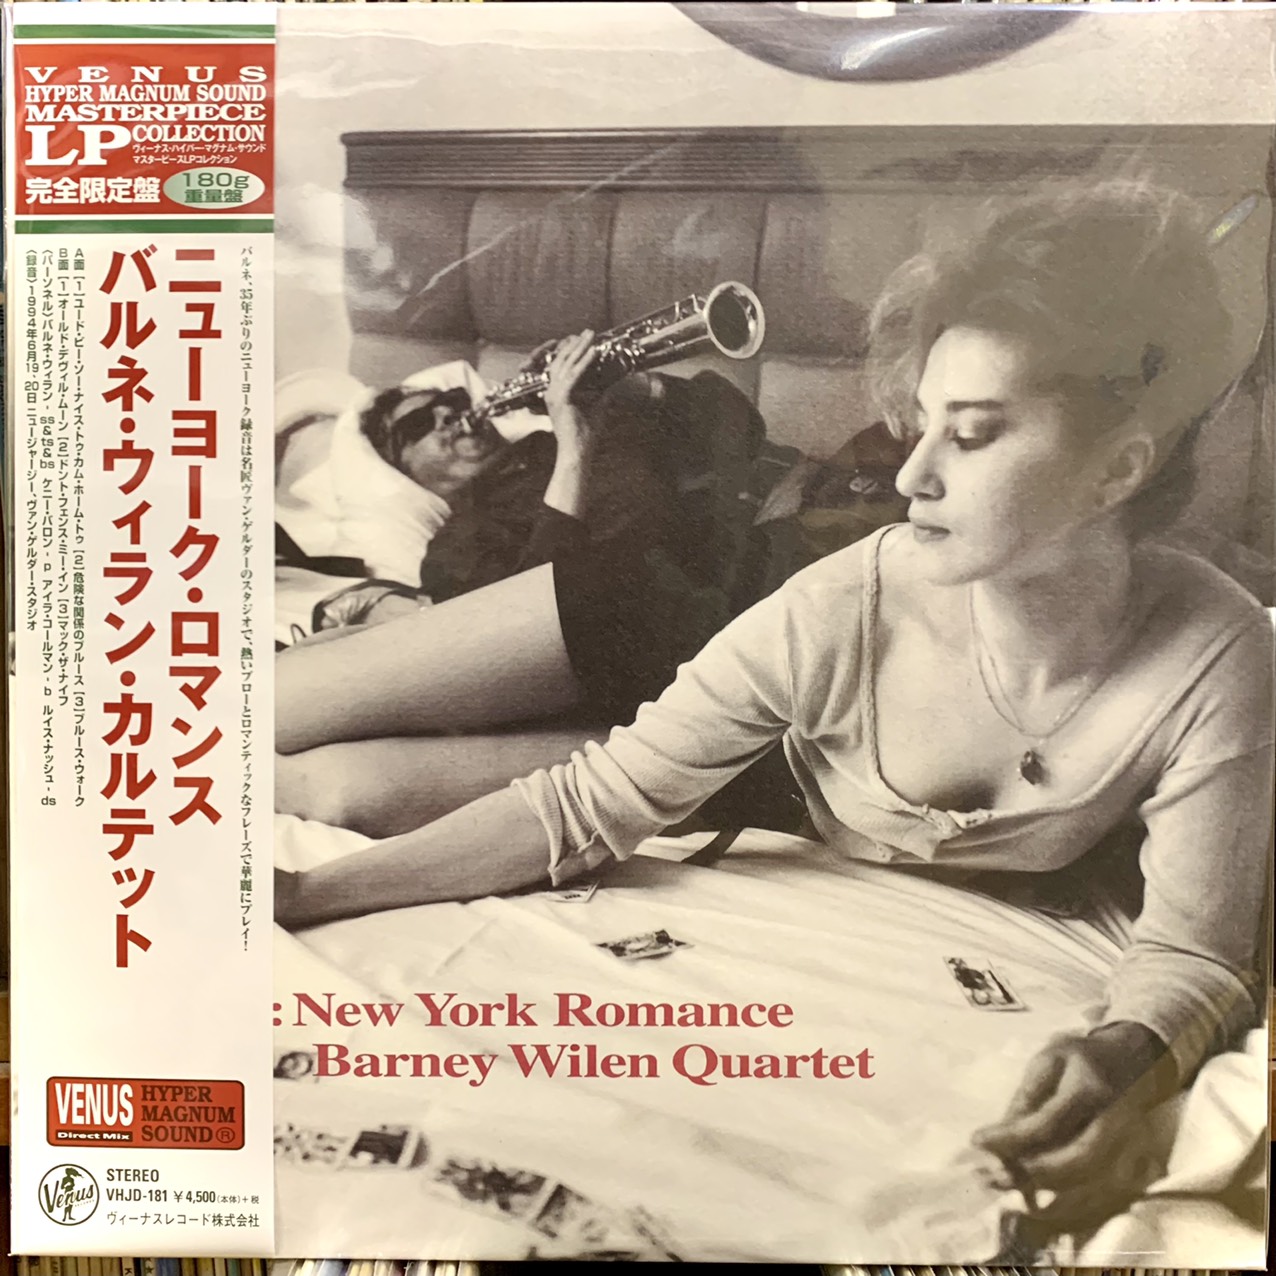 dia-than-vinyl-la-ca-new-york-romance-barney-wilen-quartet